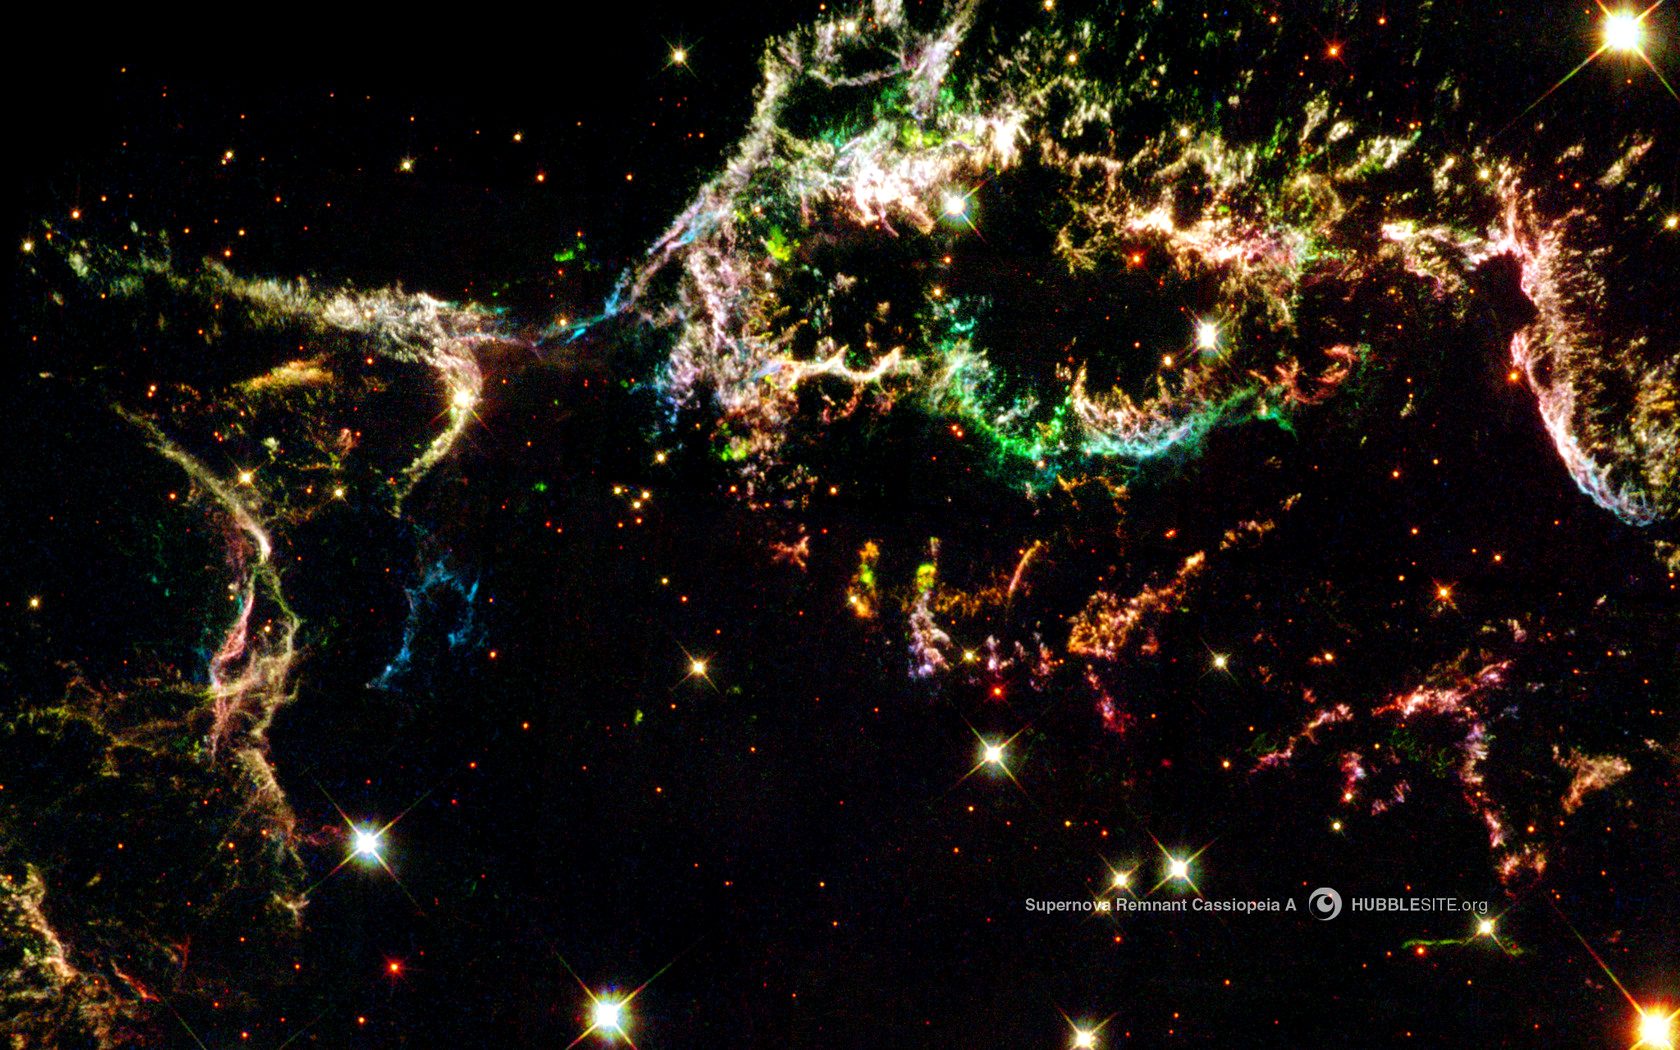 X Wallpaper Space Supernova Remains